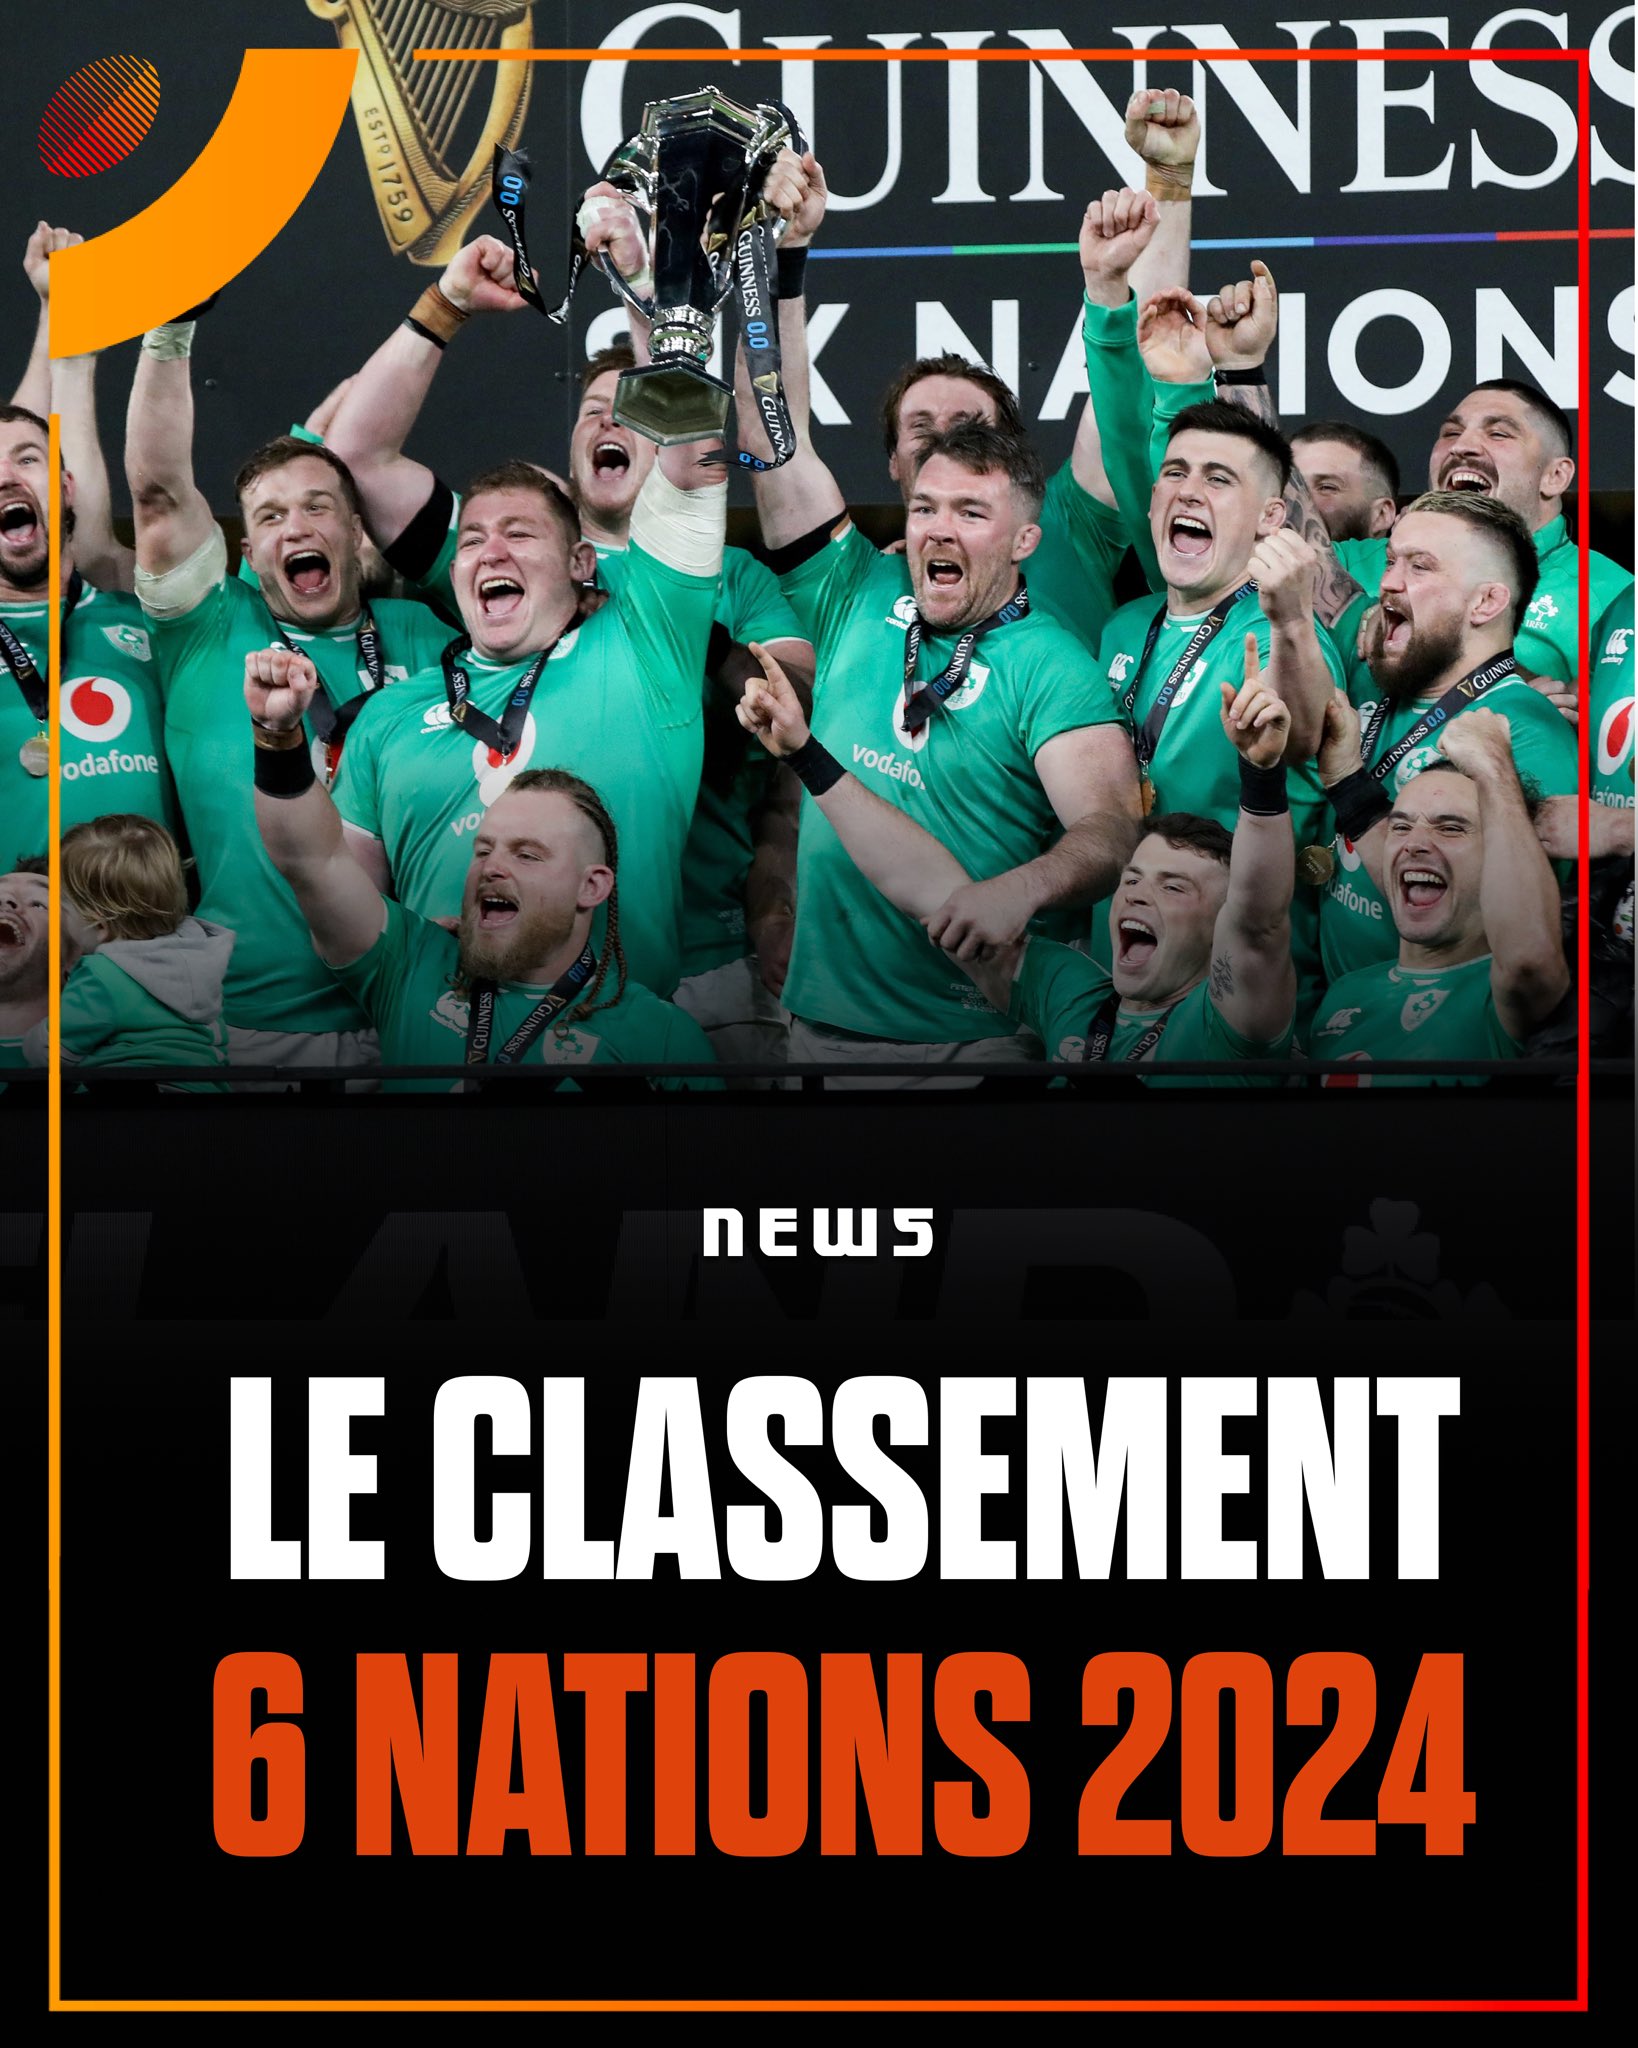 Loto rugby "Tournoi des VI nations 2024" - Page 6 GI08NrmW0AARAjG?format=jpg&name=large